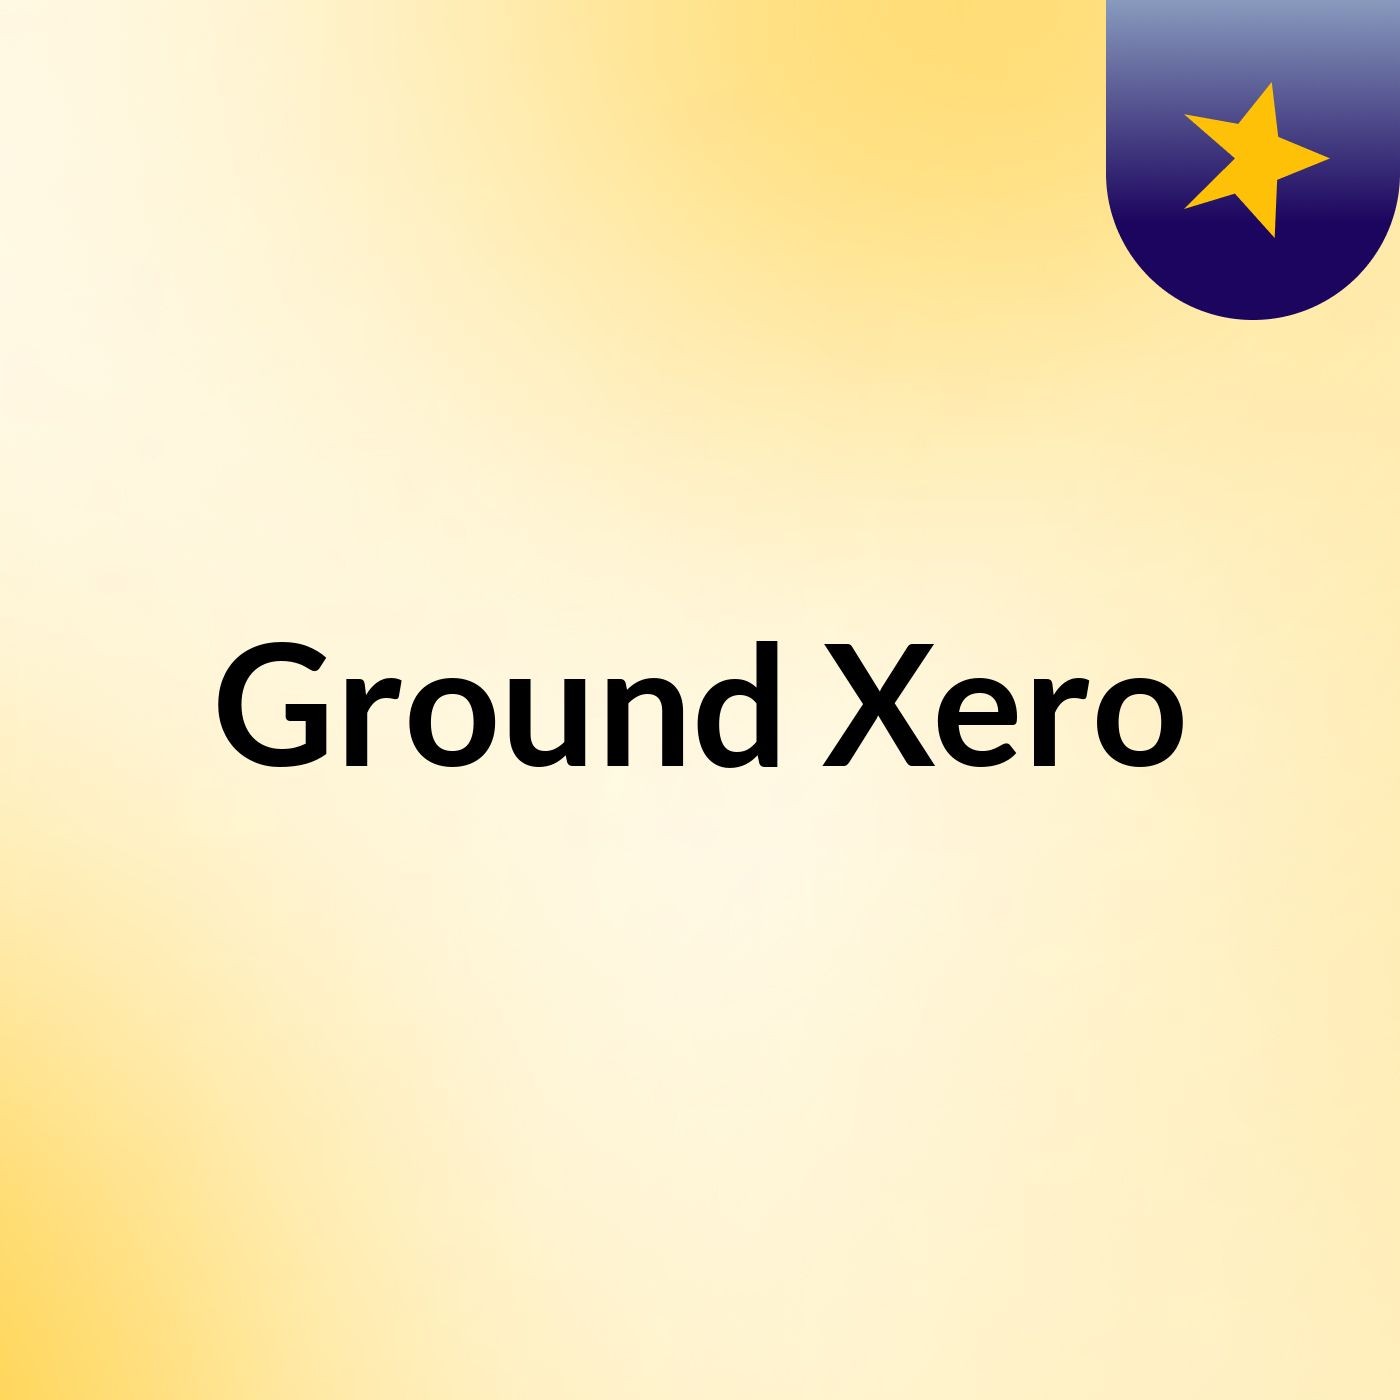 Ground Xero